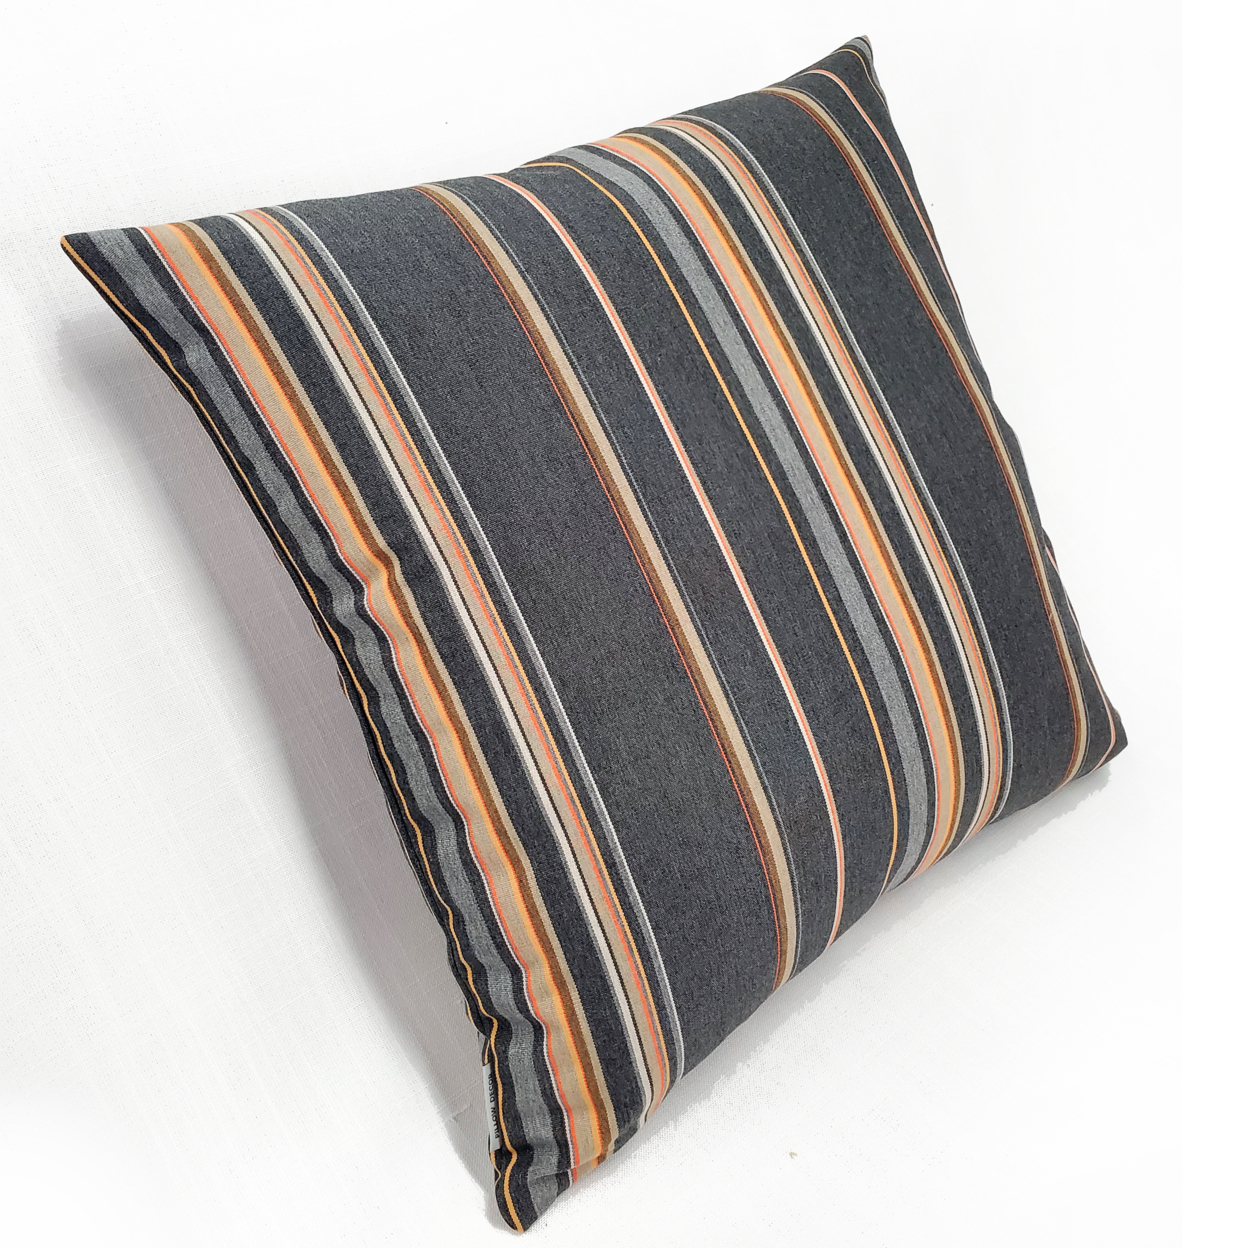 Sunbrella Stanton Greystone Outdoor Pillow 20x20, With Polyfill Insert